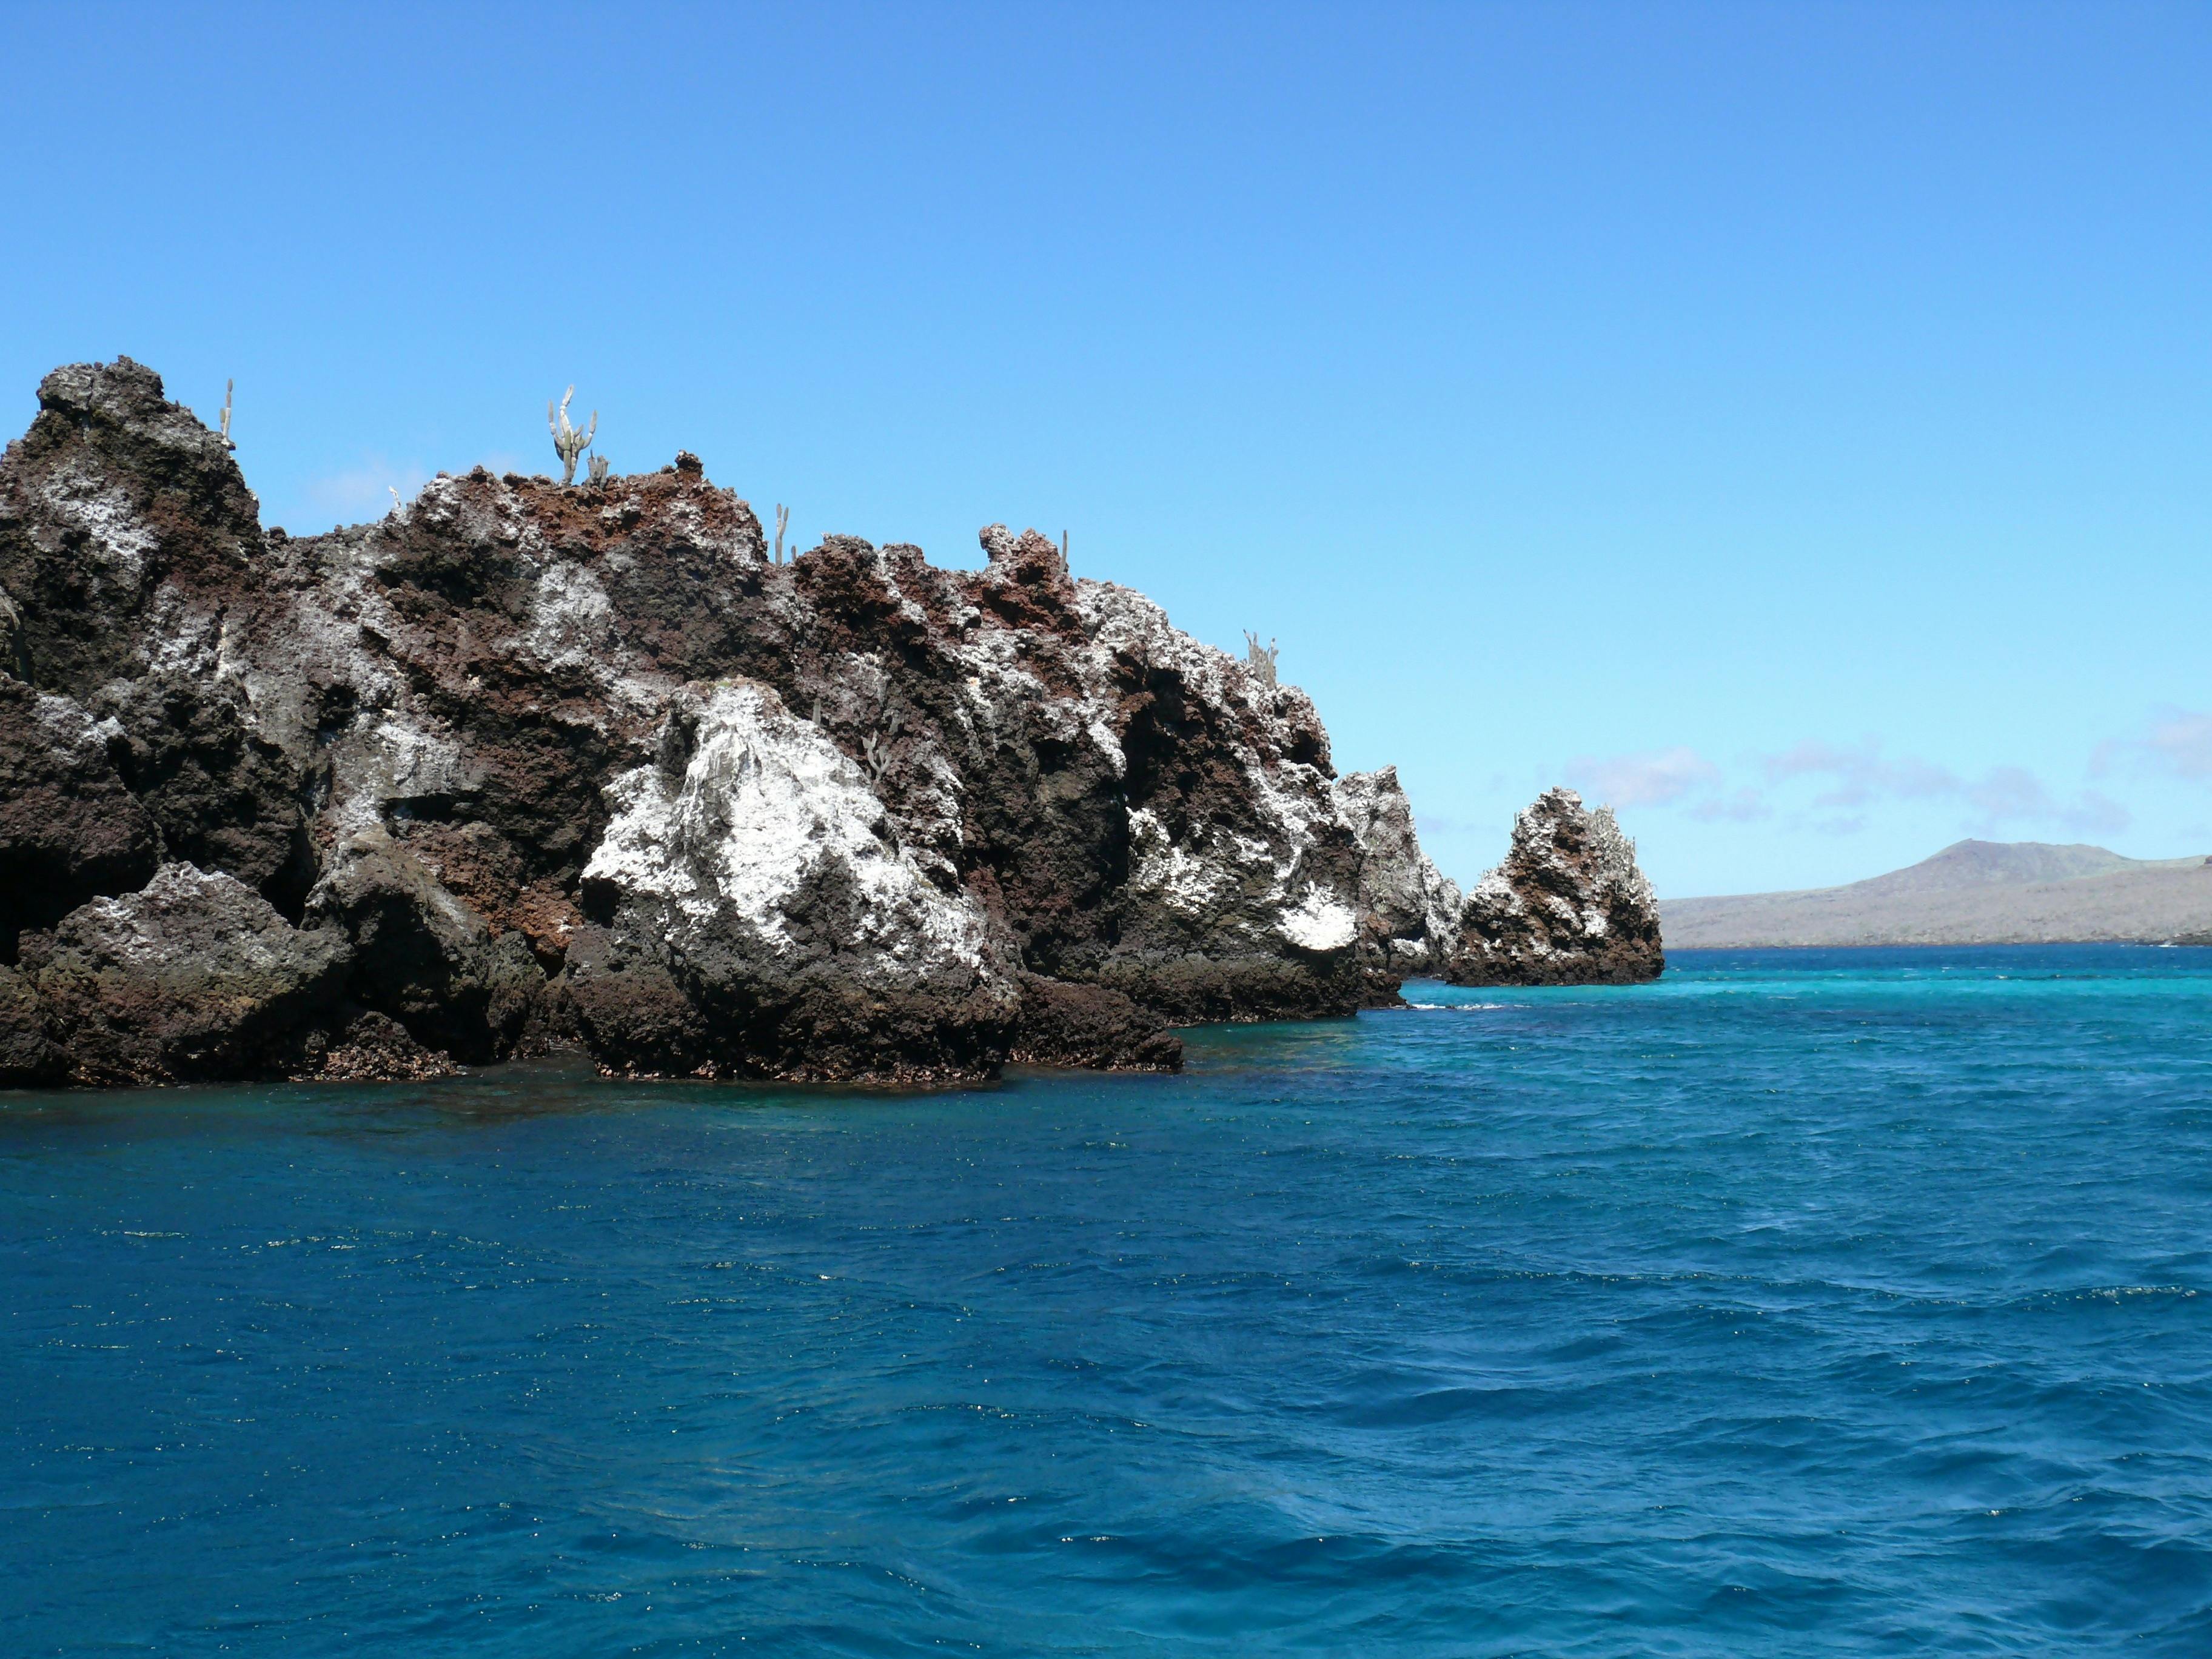 Pinzón Island-dagtour met snorkelen, vissen en La Fe-excursie